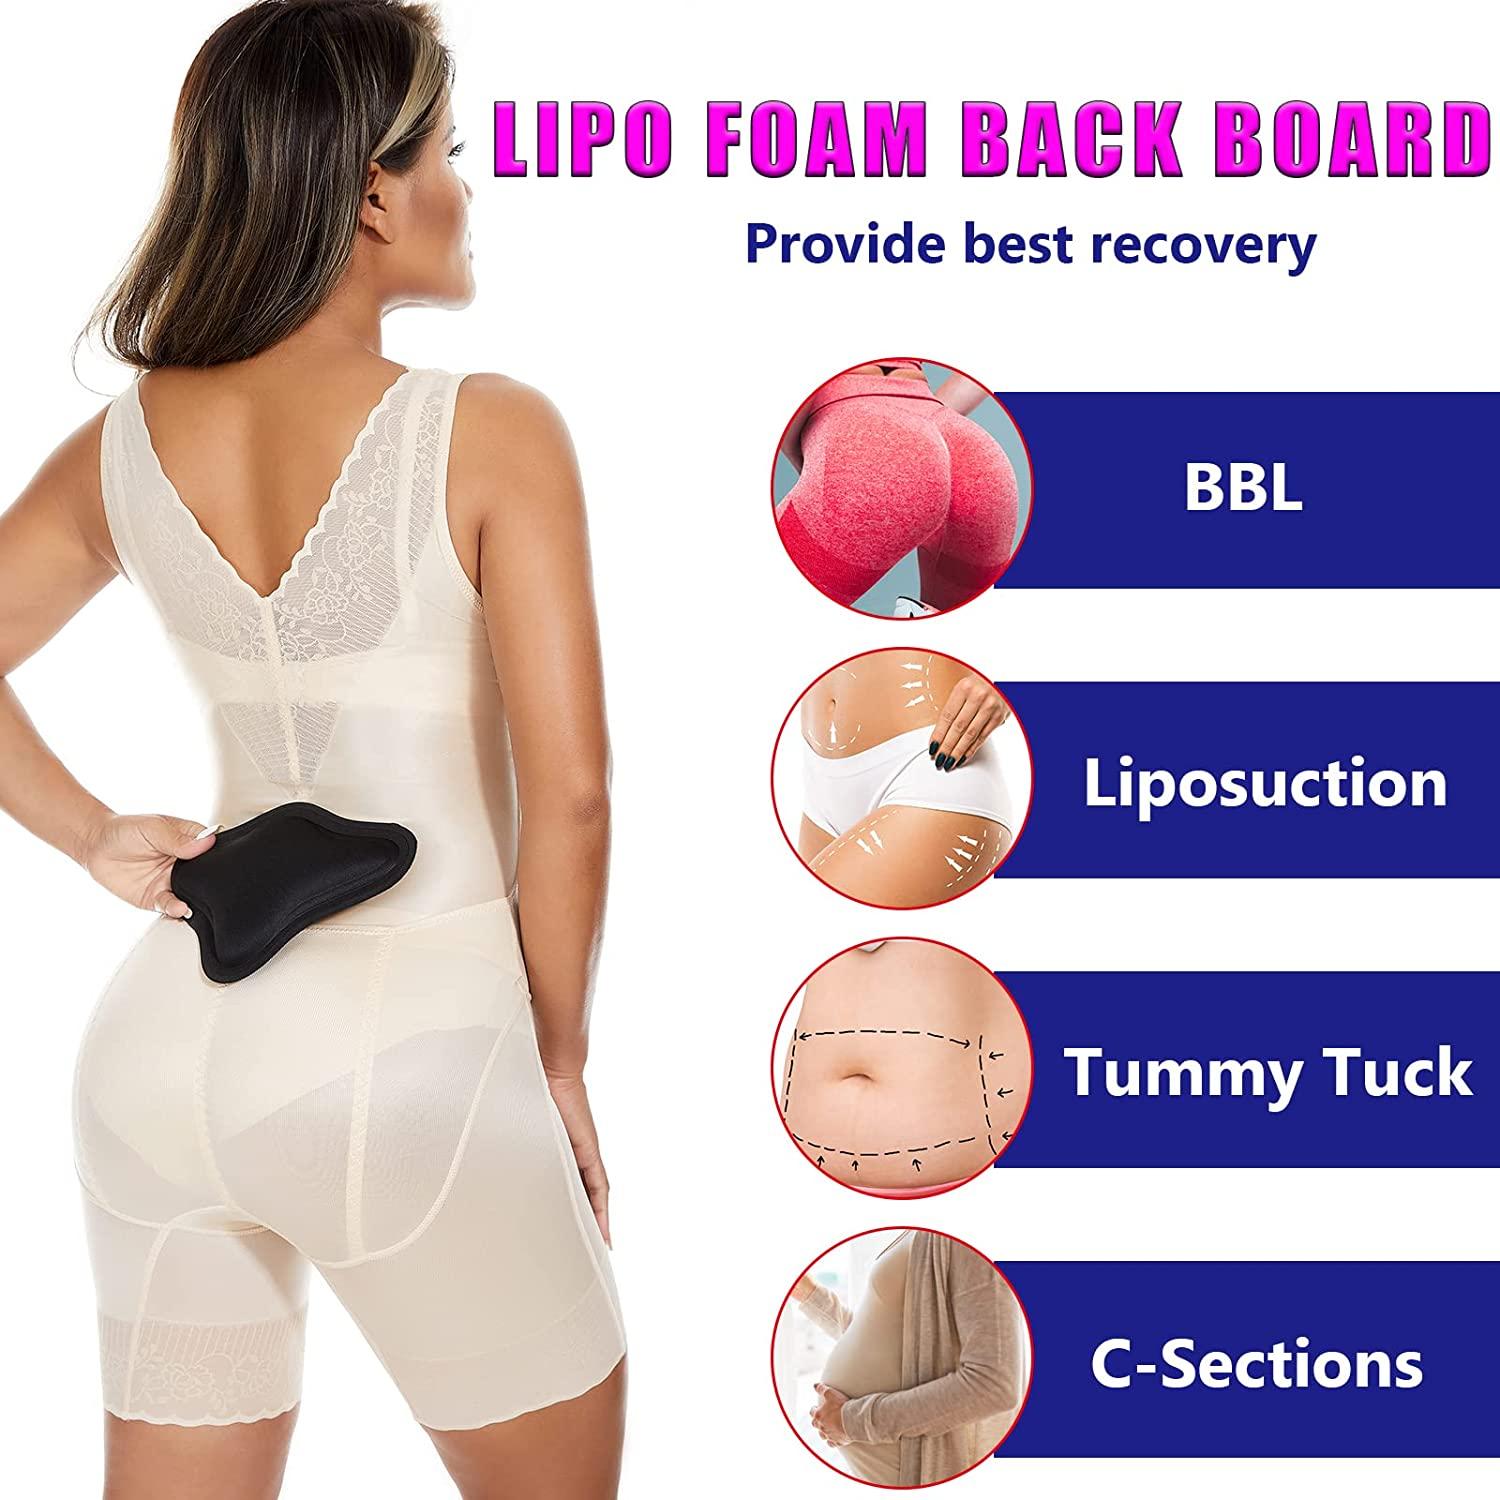 Lipo Foam Back Board, BBL Lumbar Molder, Lipo Board Post Surgery